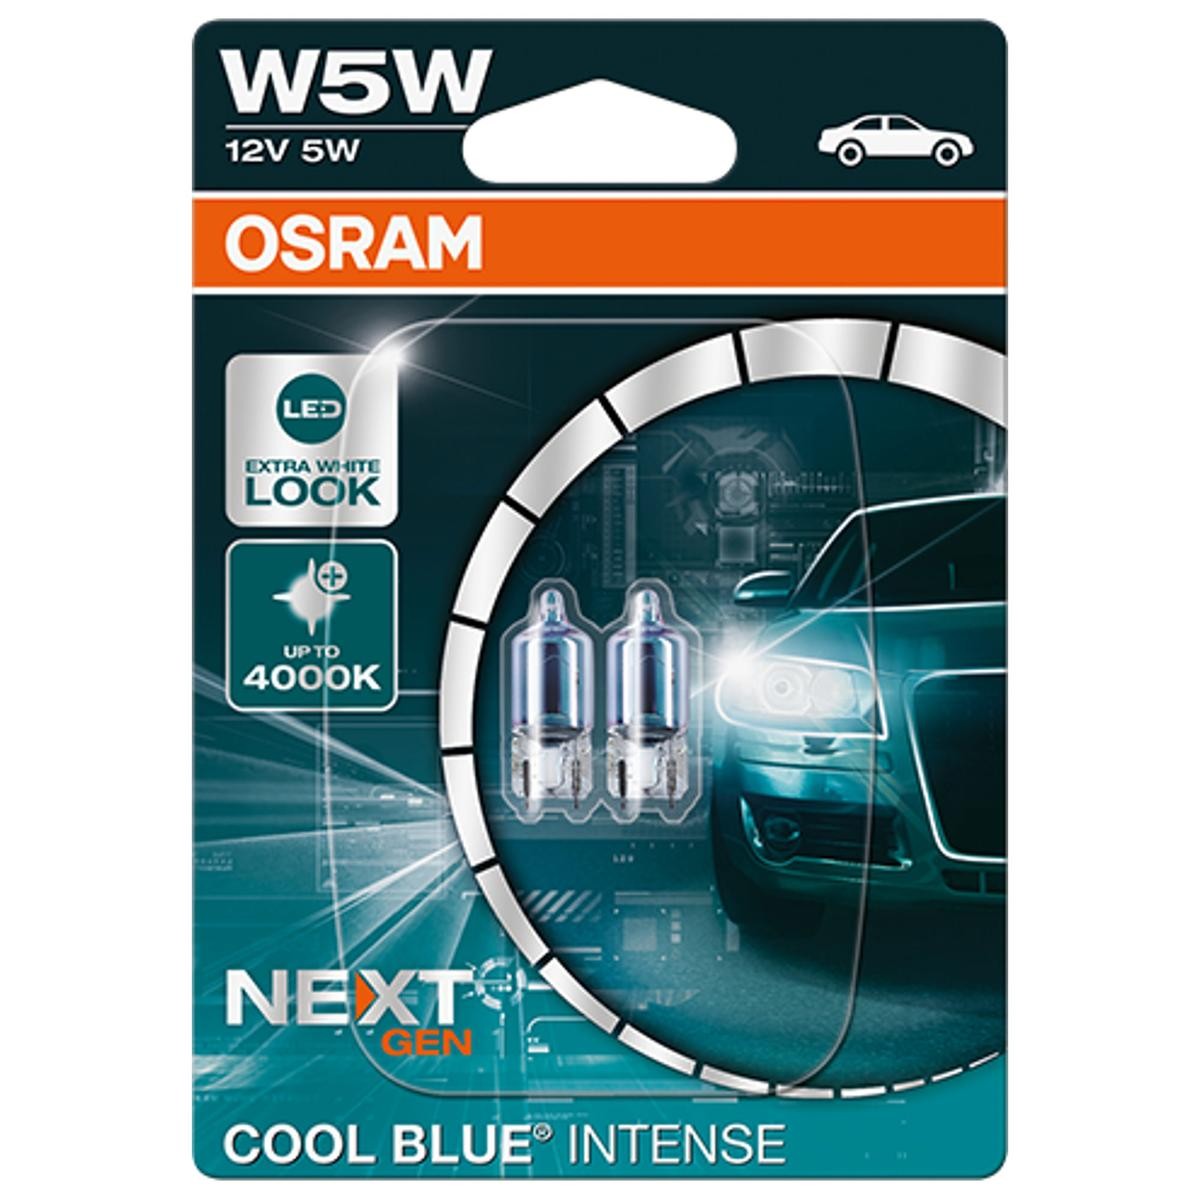 DUCATI 1098 Blinkerbirne 12V 5W, W5W OSRAM COOL BLUE INTENSE next Generation 2825CBN-02B